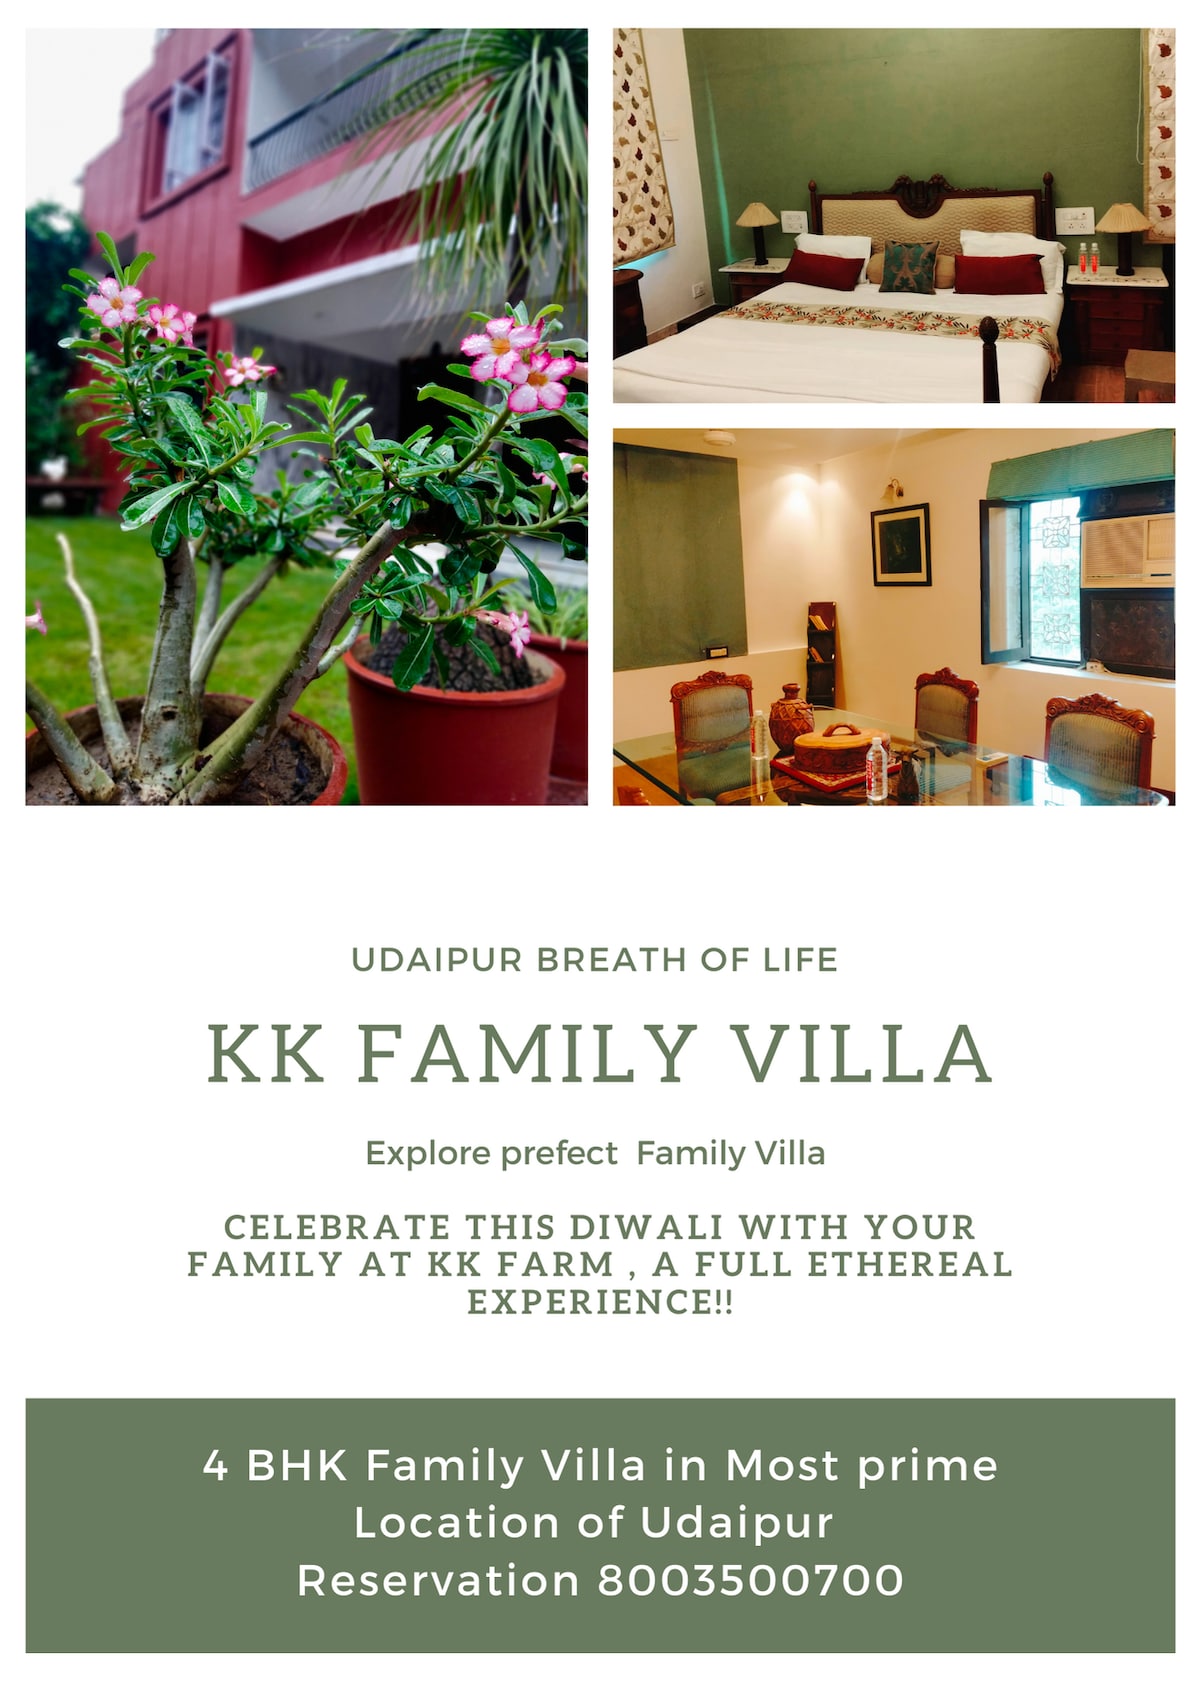 KK Family Villa Breathe of Life